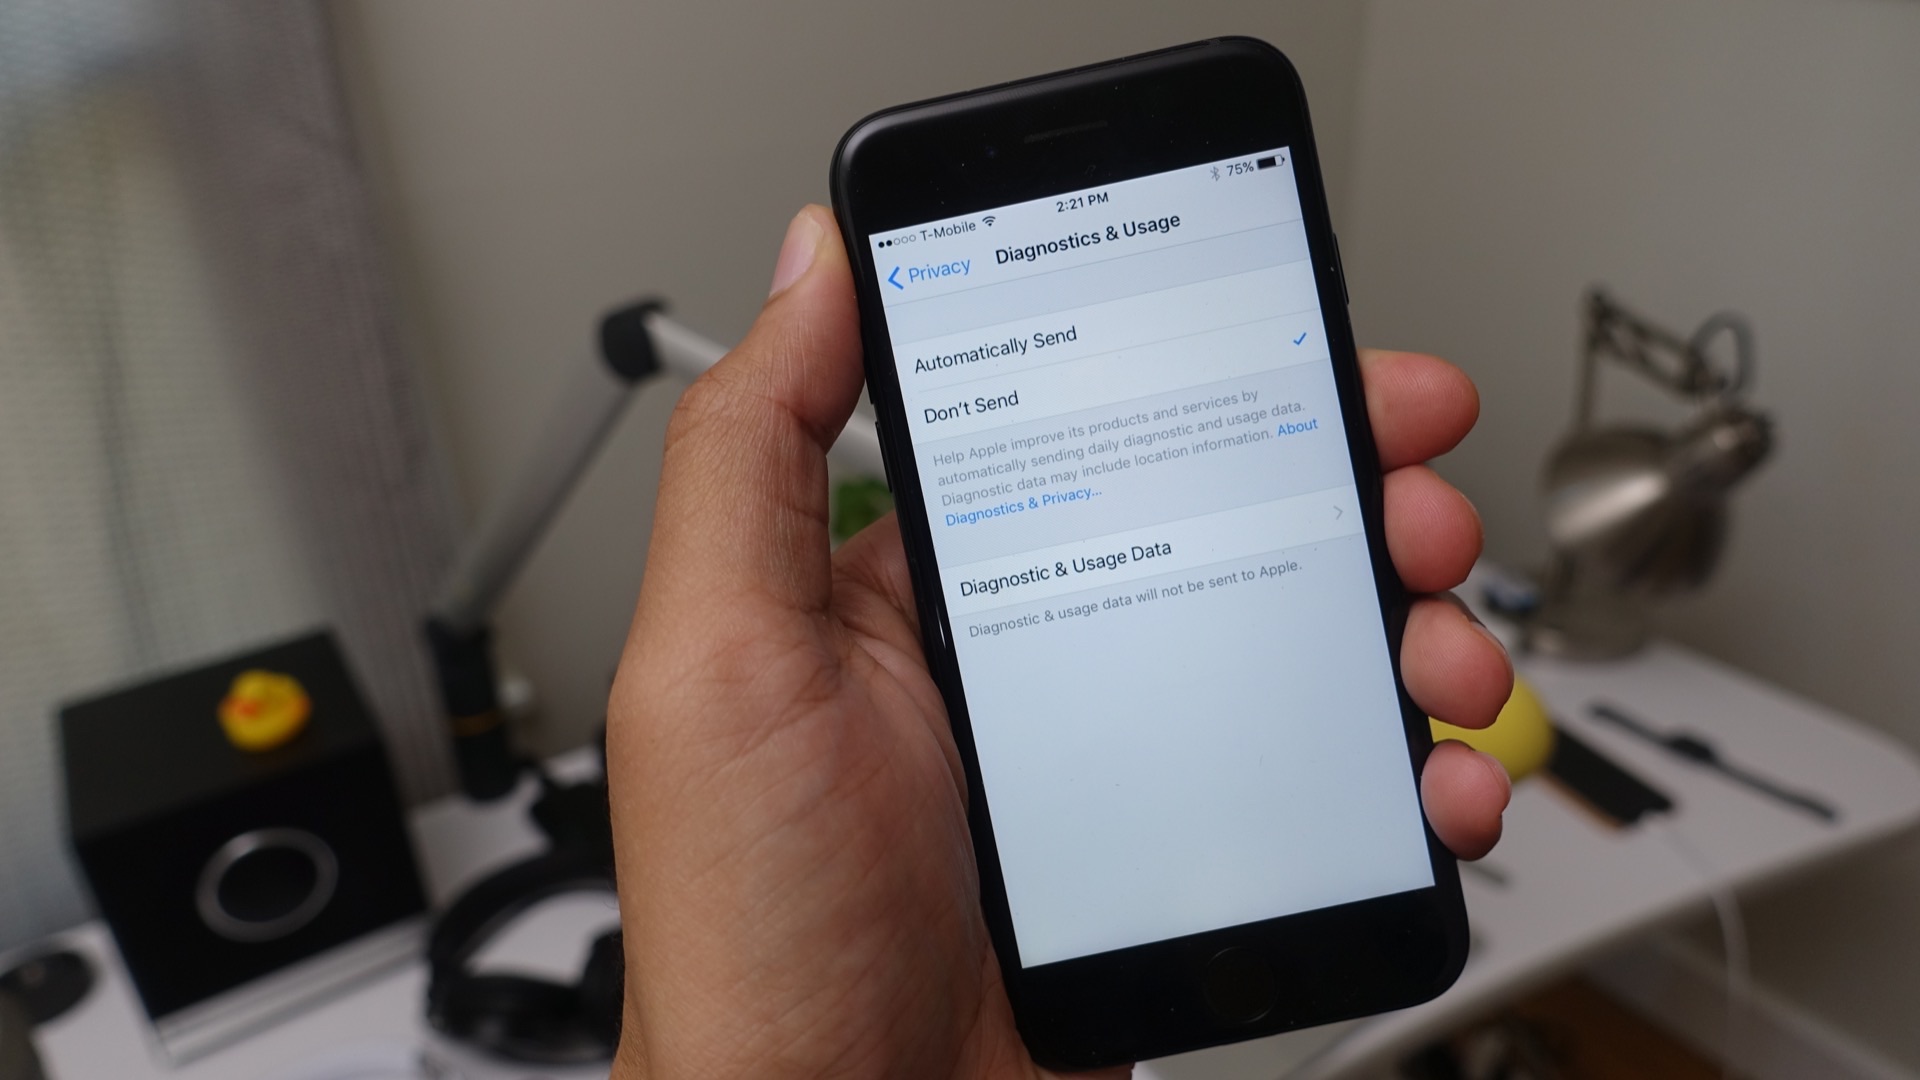 Diagnostics and Usage iOS 10 iPhone 7 Jet Black